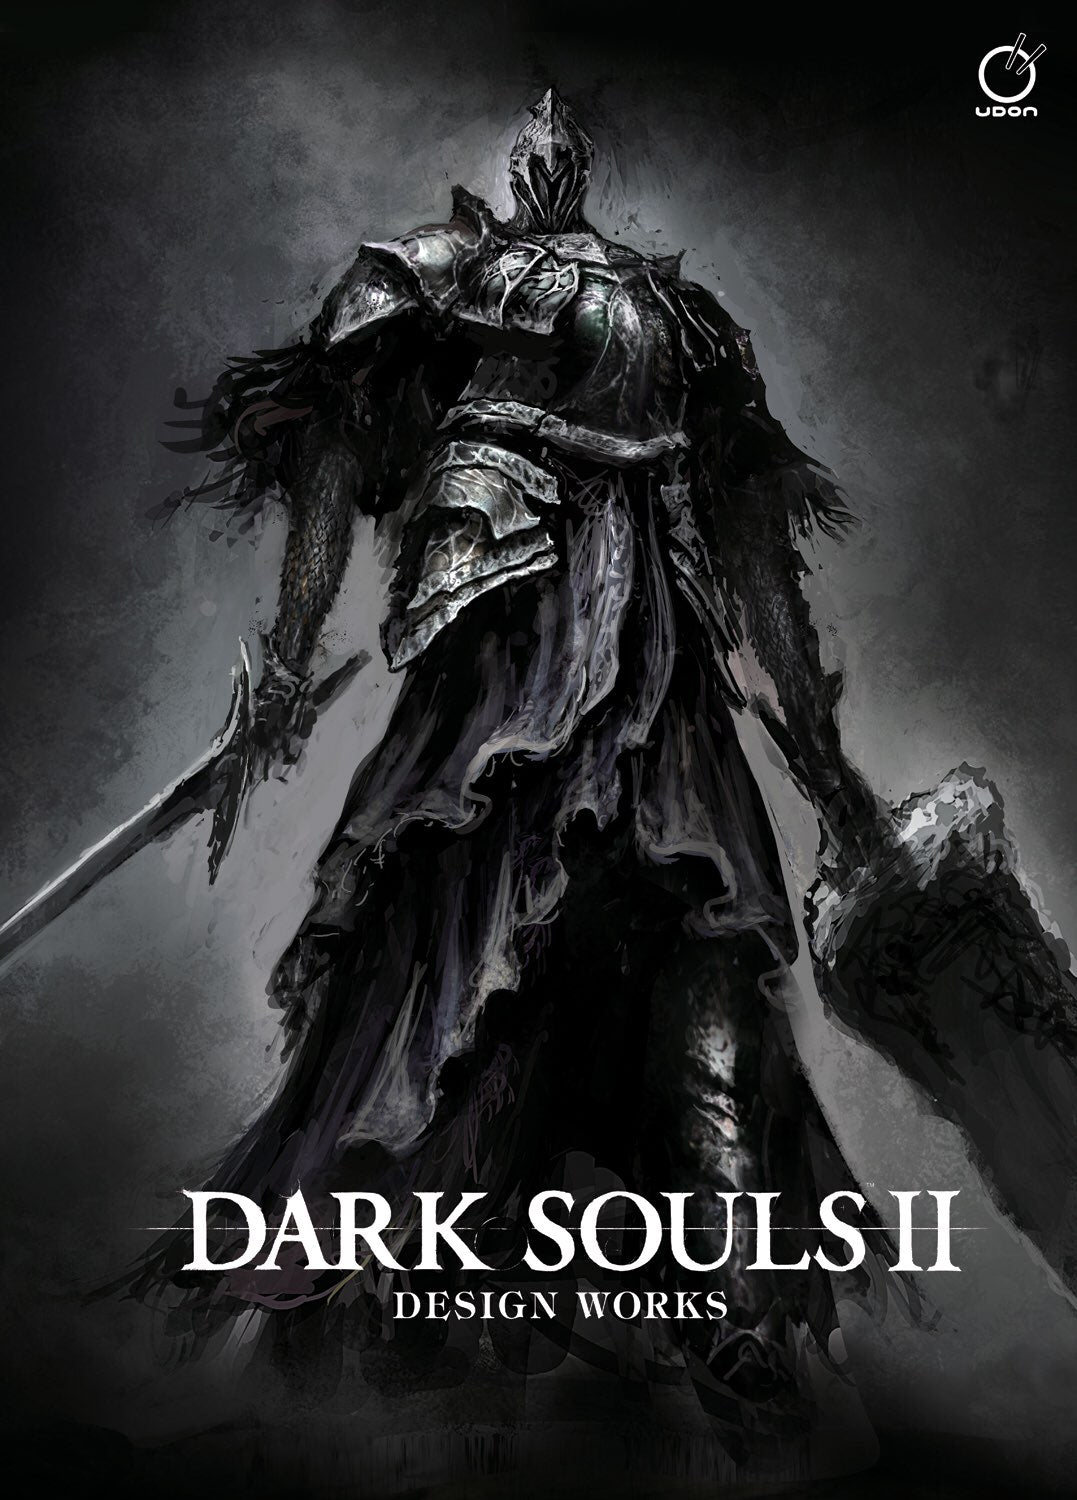 How long is Dark Souls II?